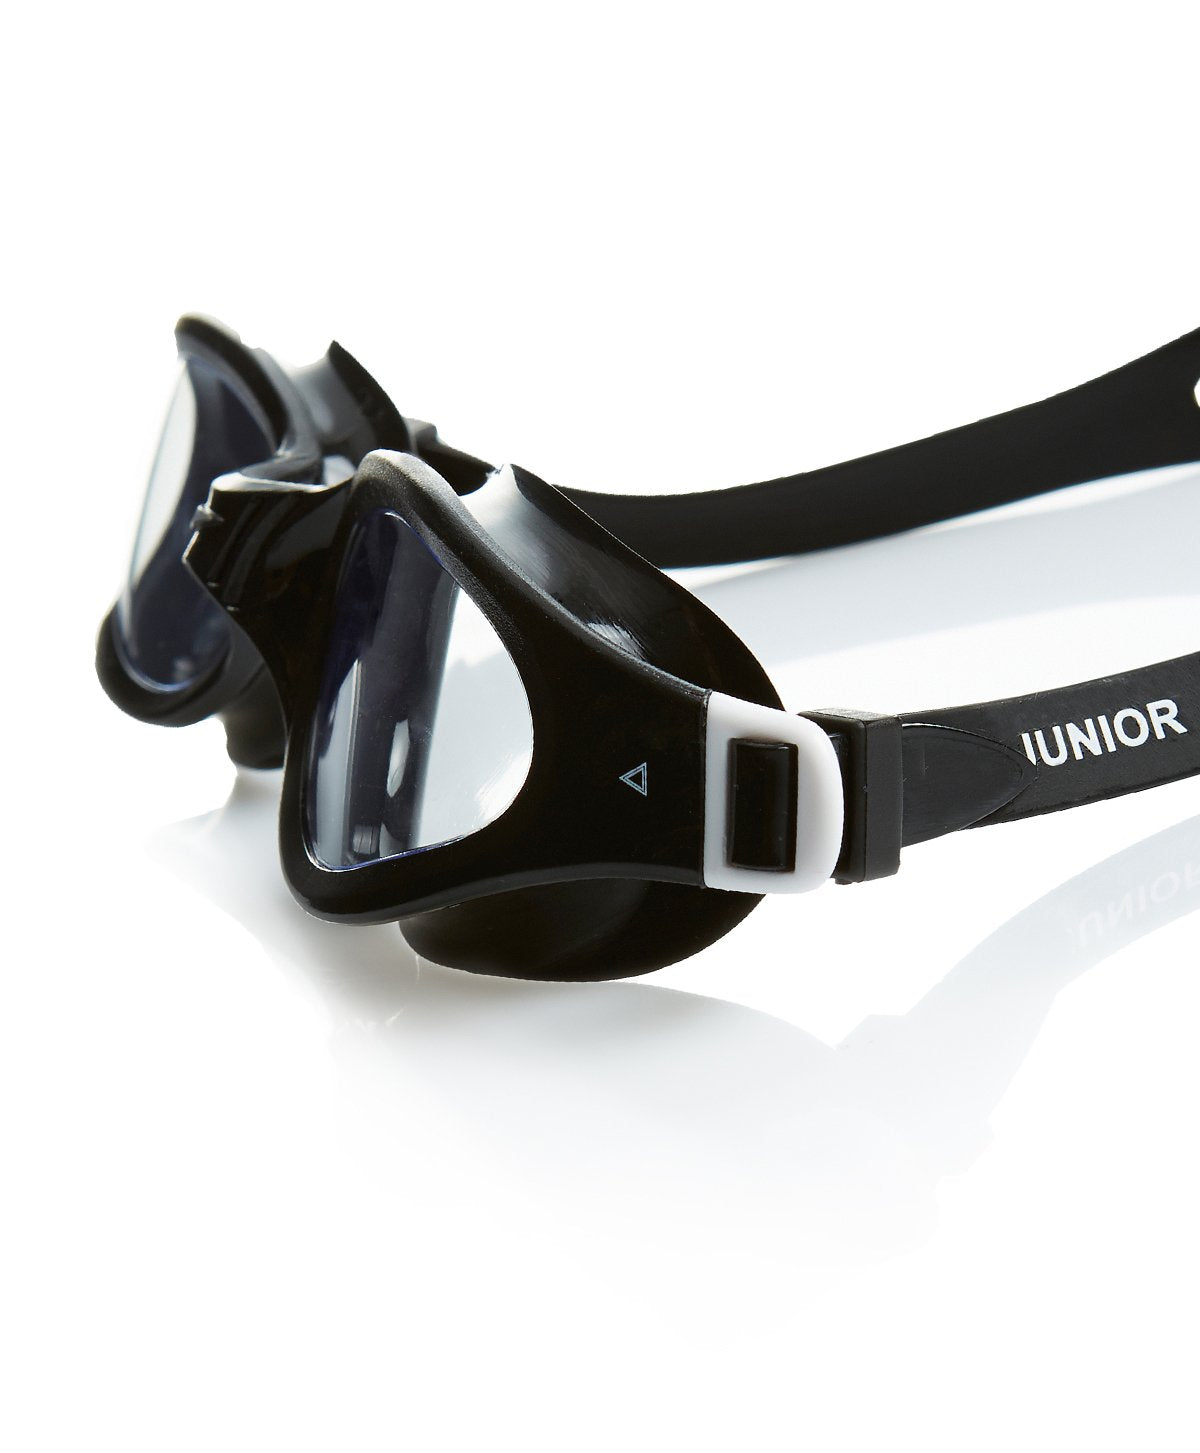 Speedo Unisex-Adult Futura Plus Goggles (Black/Clear) - Best Price online Prokicksports.com